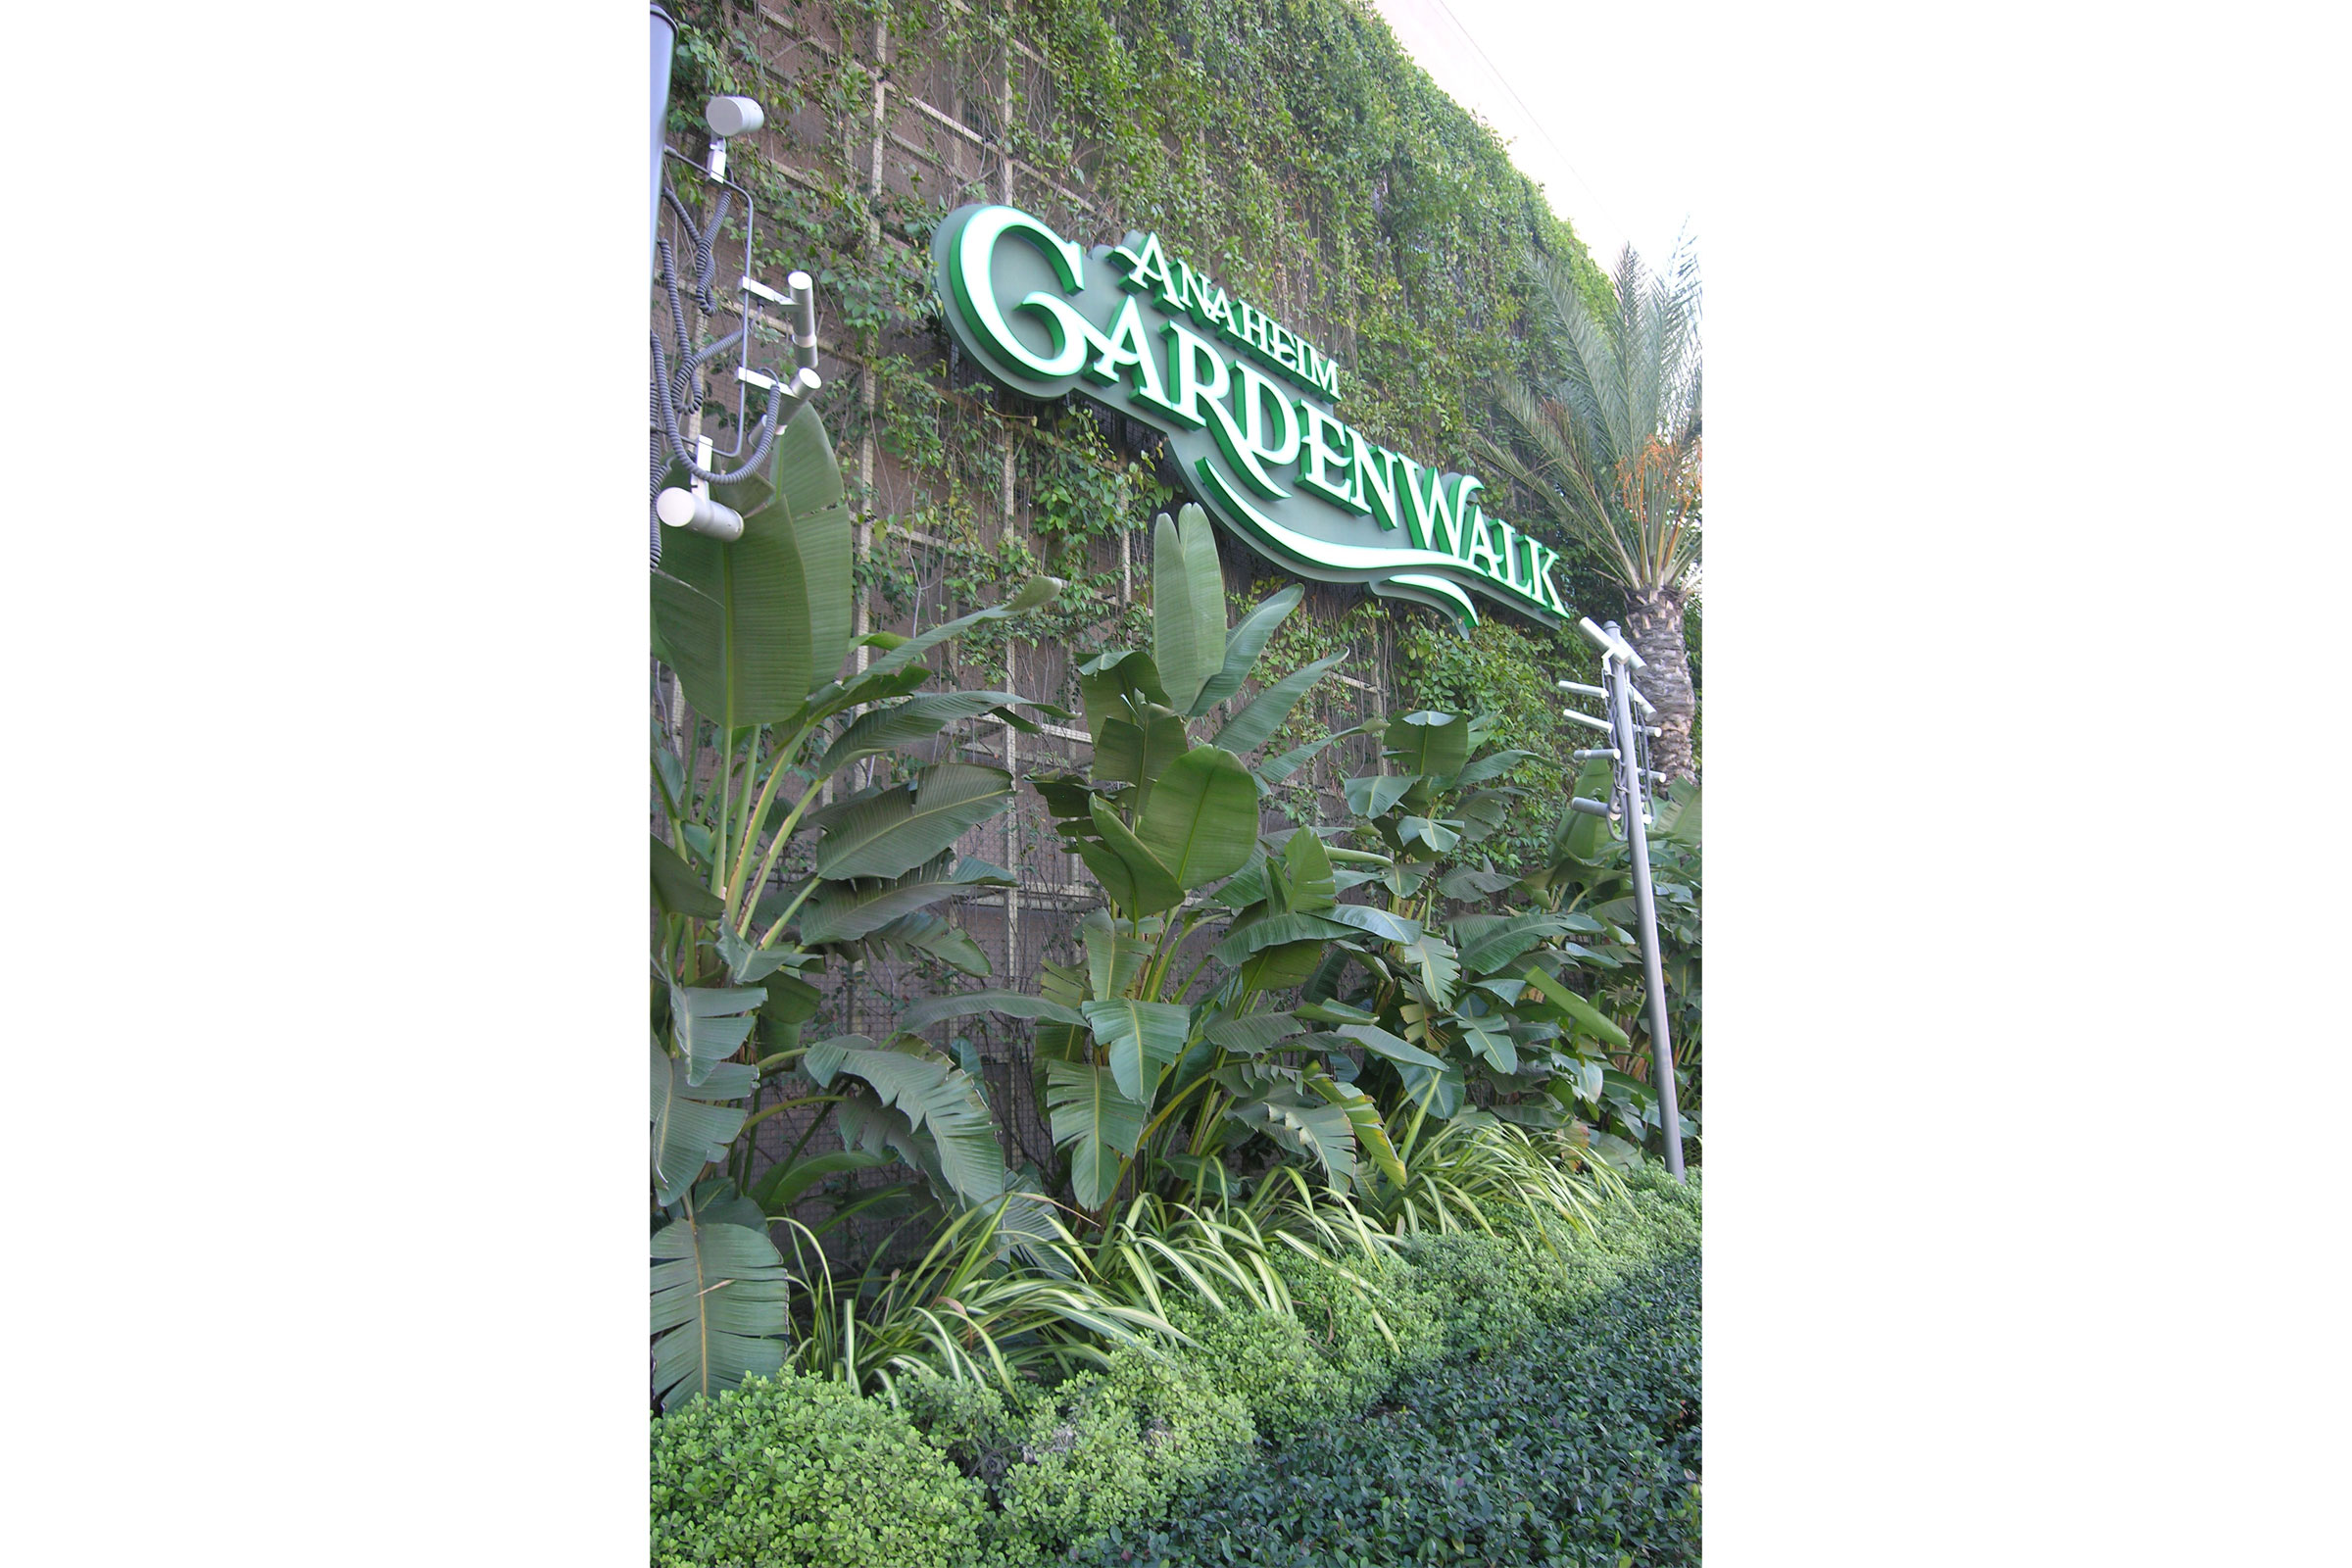 Anaheim GardenWalk Brings Lush Green Facades to Southern California